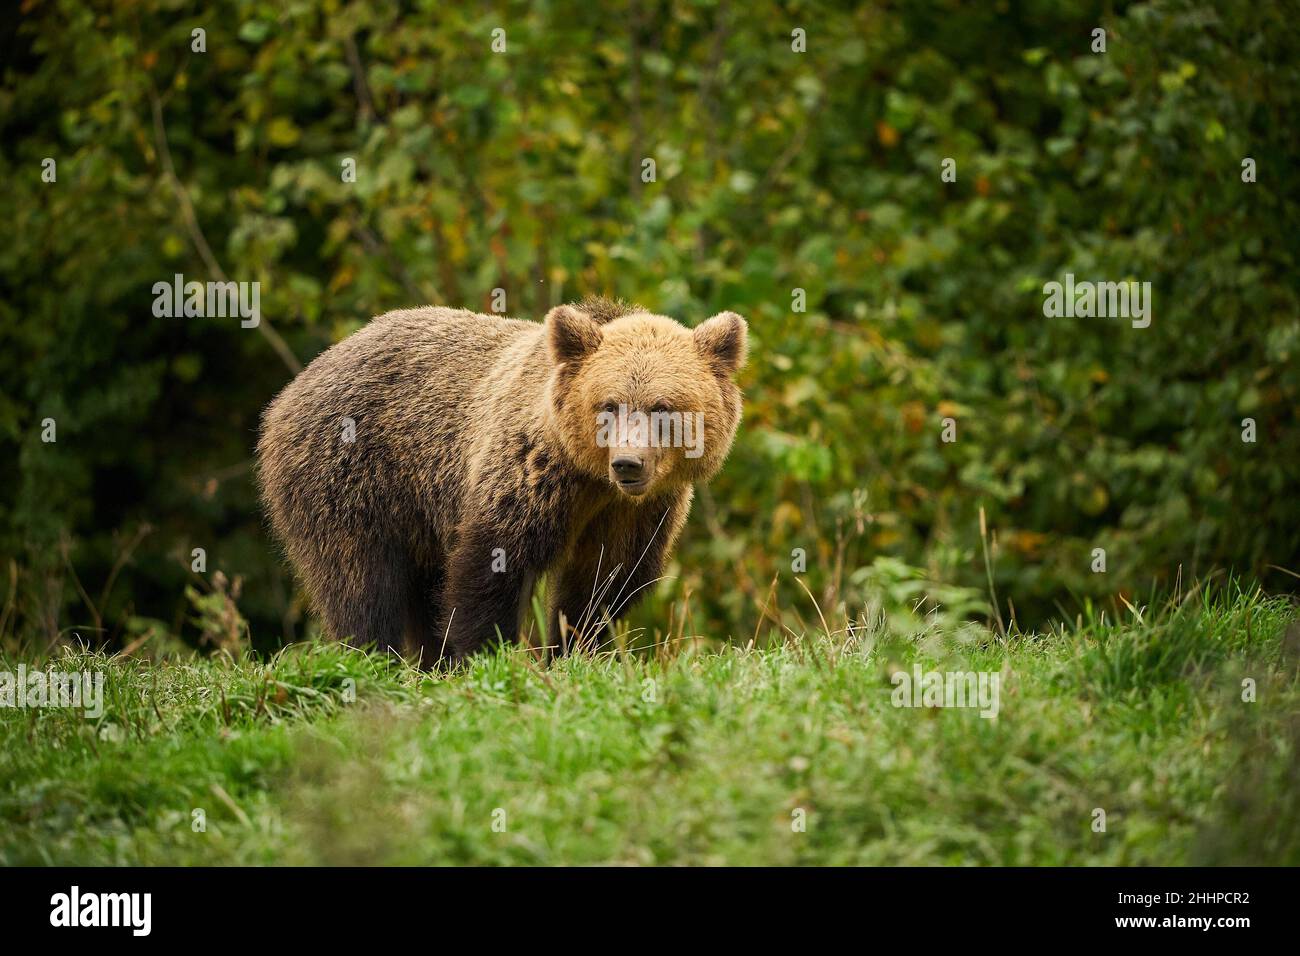 Dangerous animal in nature meadow habitat. Wildlife scene from Poland. Stock Photo